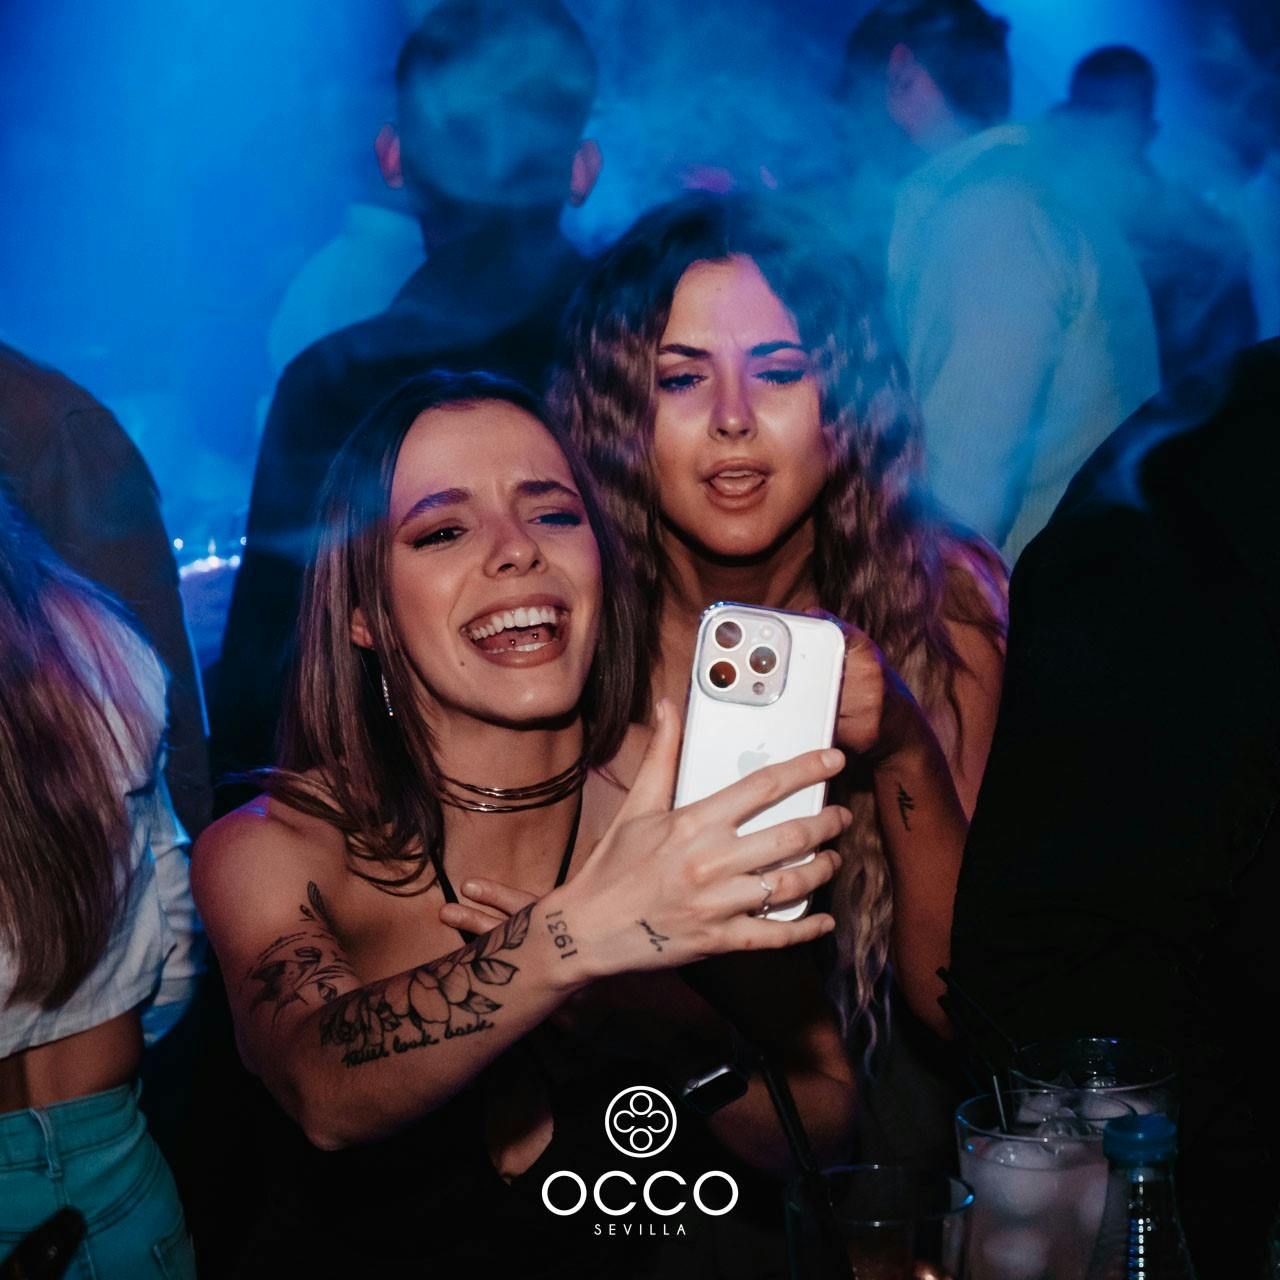 Occo-chica-selfie-fiesta-imagine